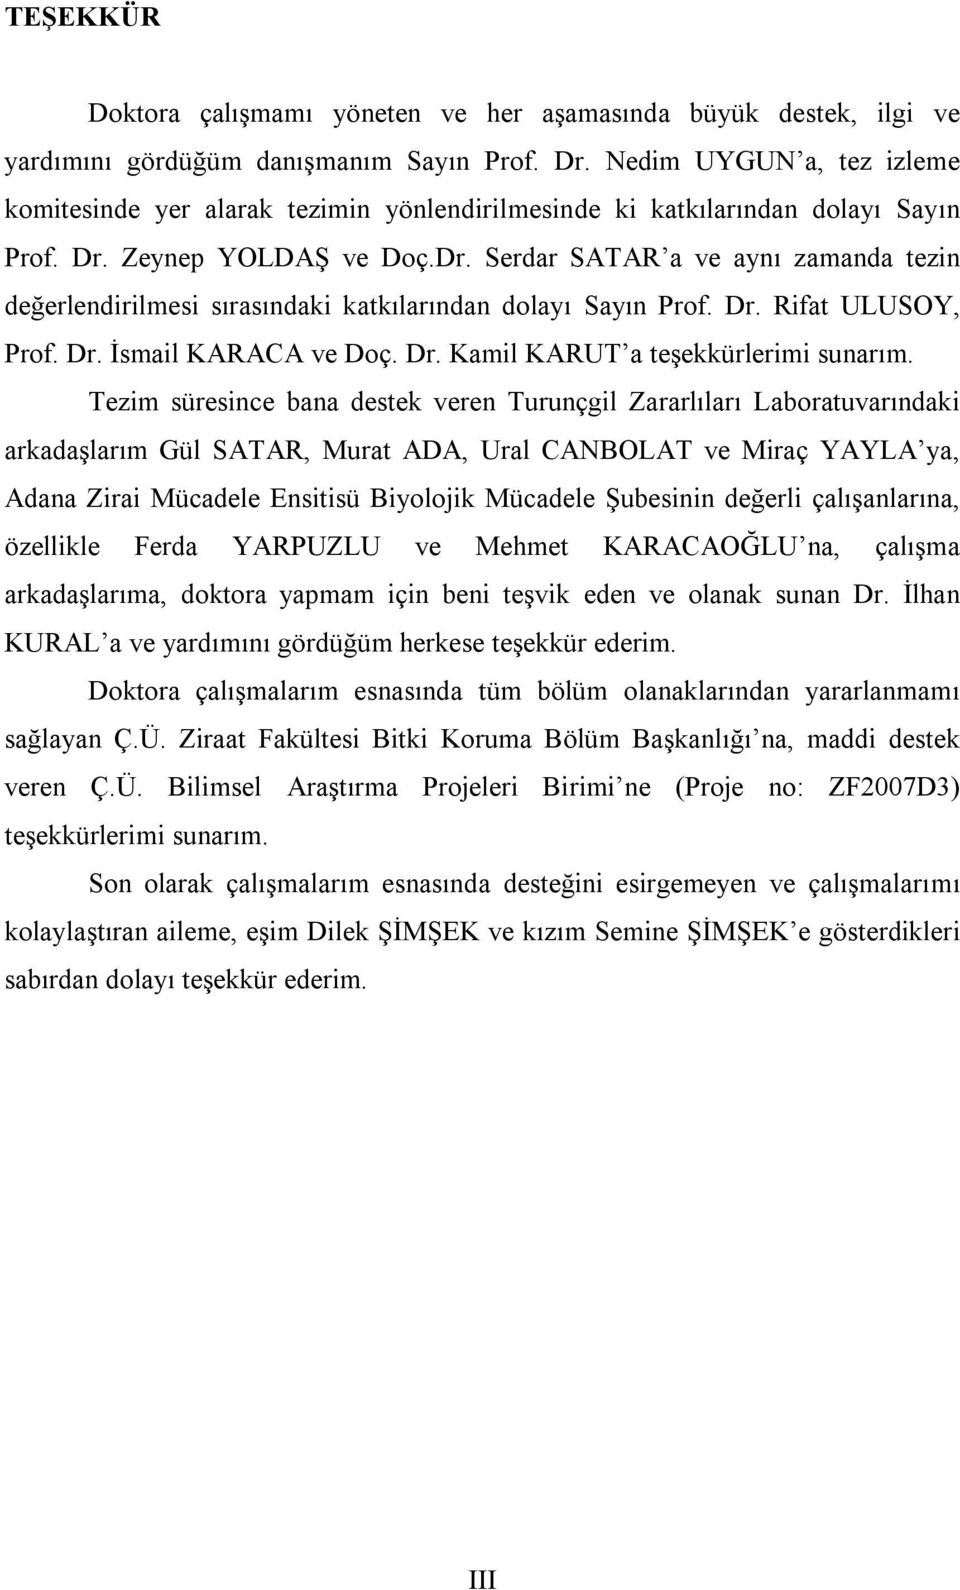 Dr. Rift ULUSOY, Prof. Dr. İsmil KARACA ve Doç. Dr. Kmil KARUT teşekkürlerimi sunrım.